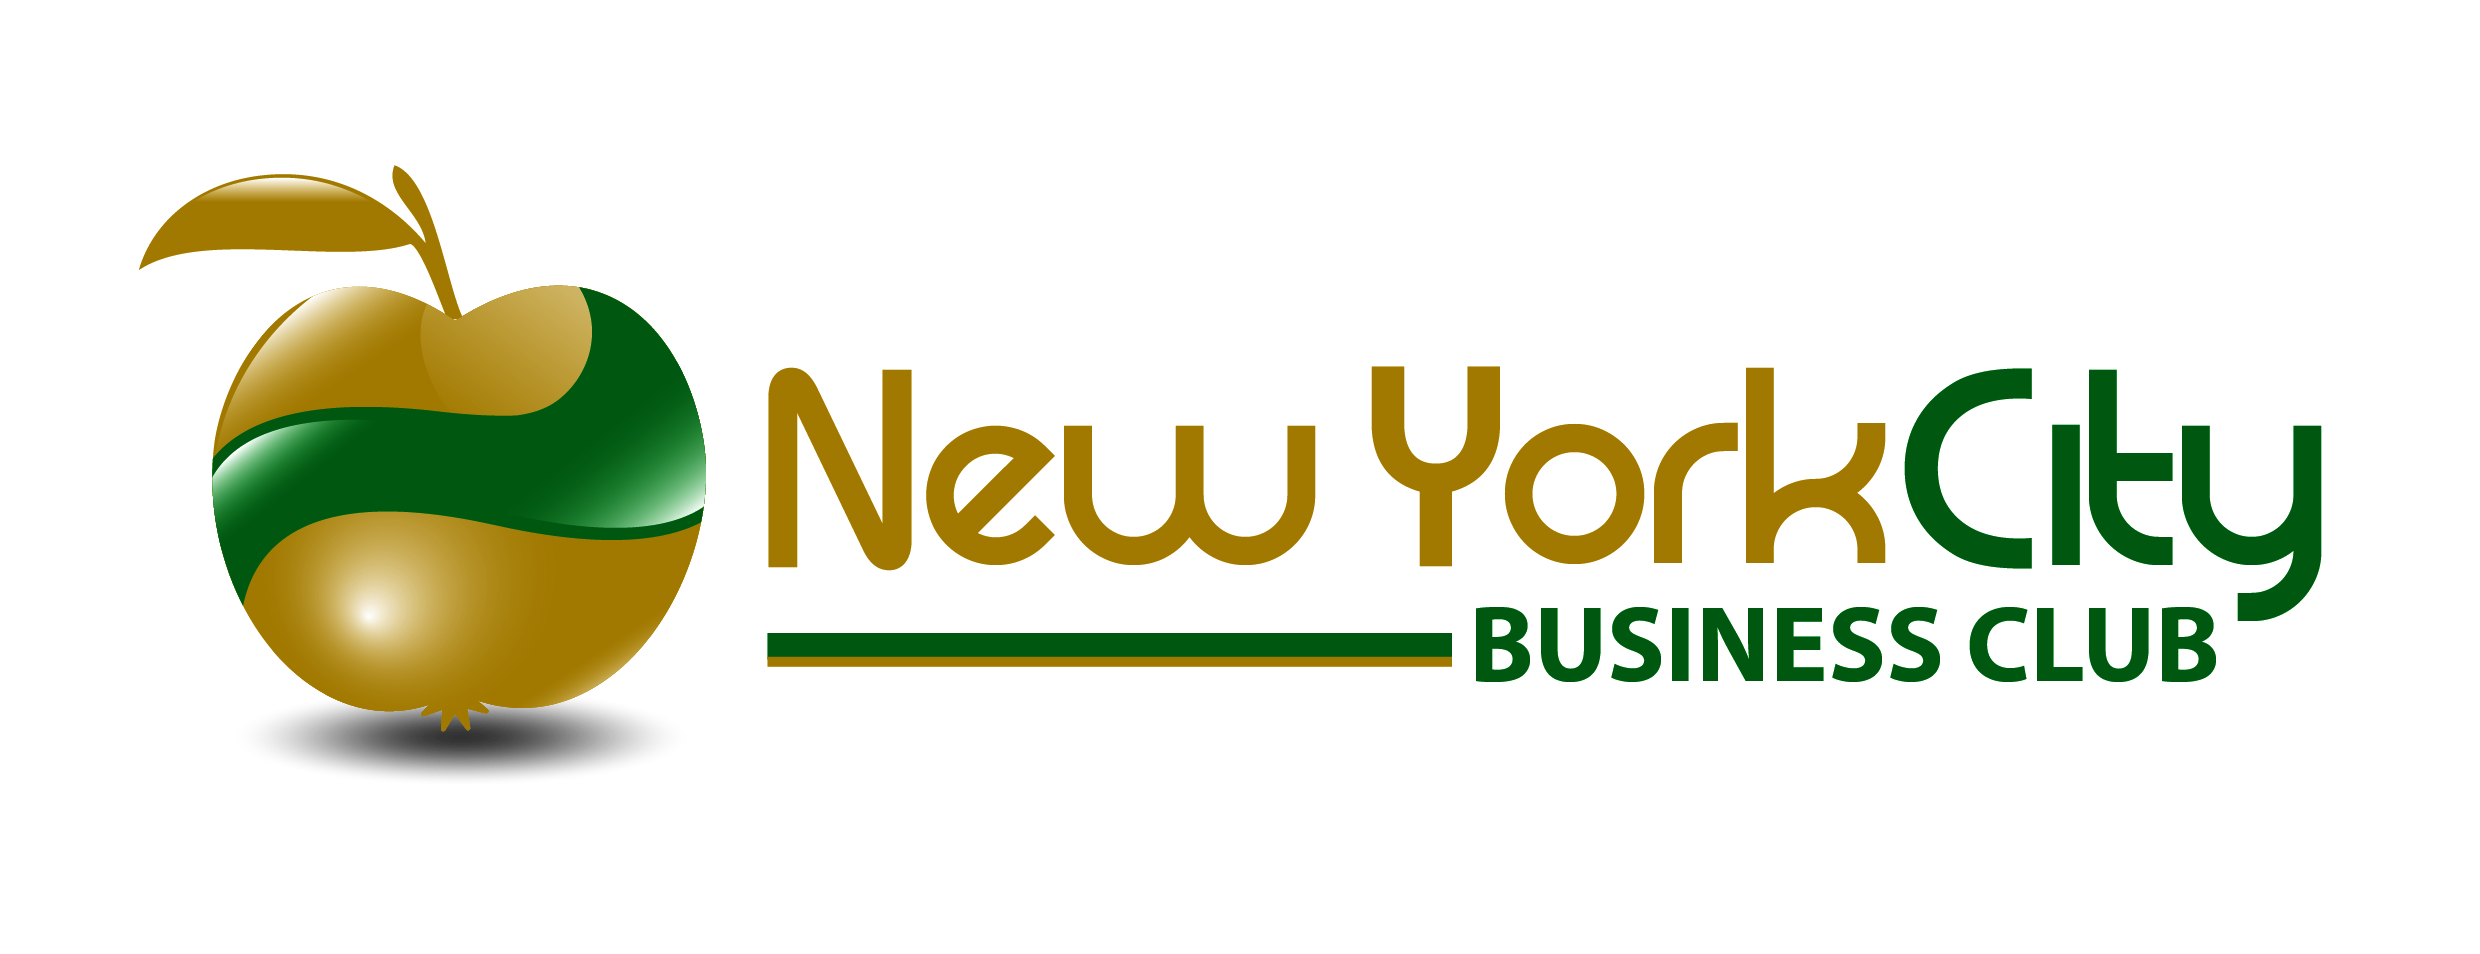 New York City Business Club